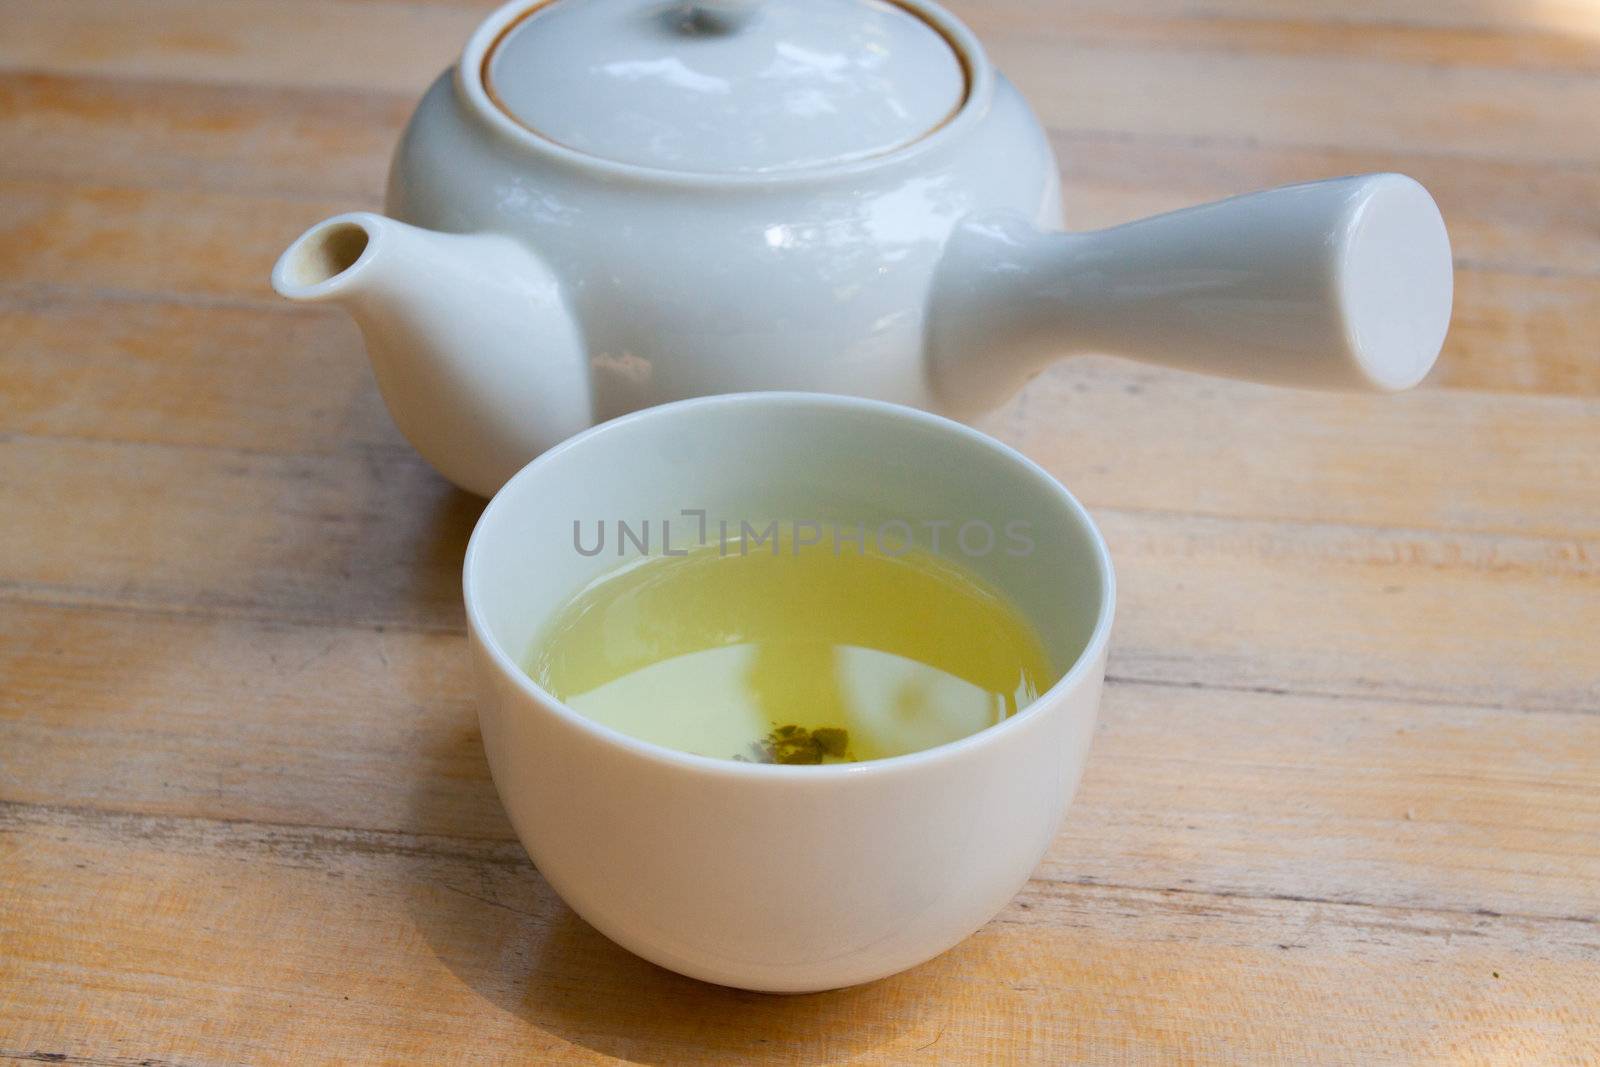 Green tea is served in Japanese tea garden in San Fracisco.